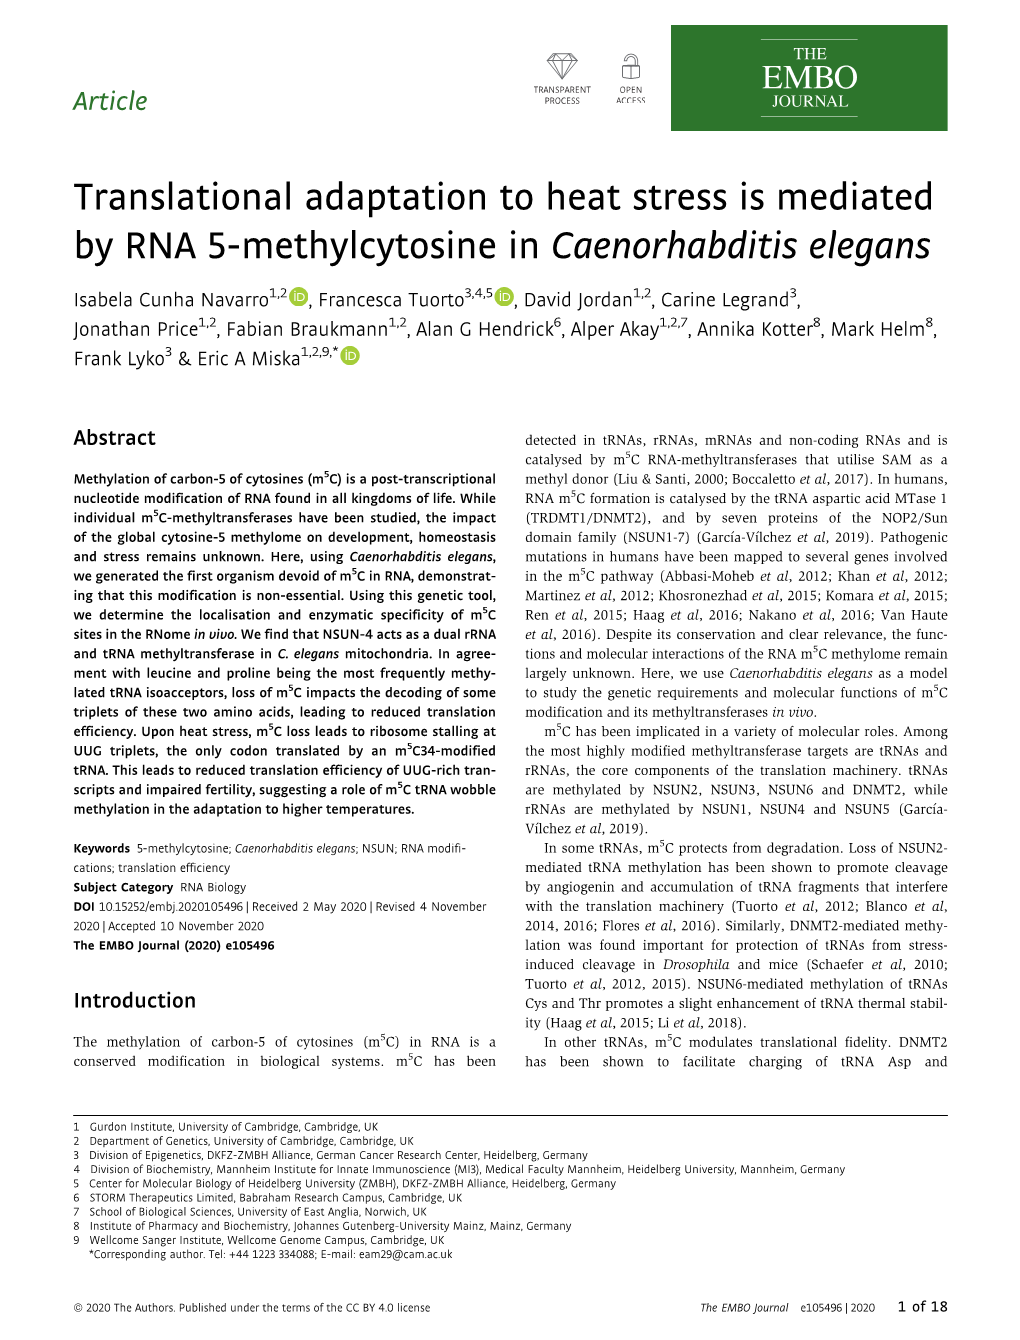 Translational Adaptation to Heat Stress Is Mediated by RNA 5-Methylcytosine in Caenorhabditis Elegans